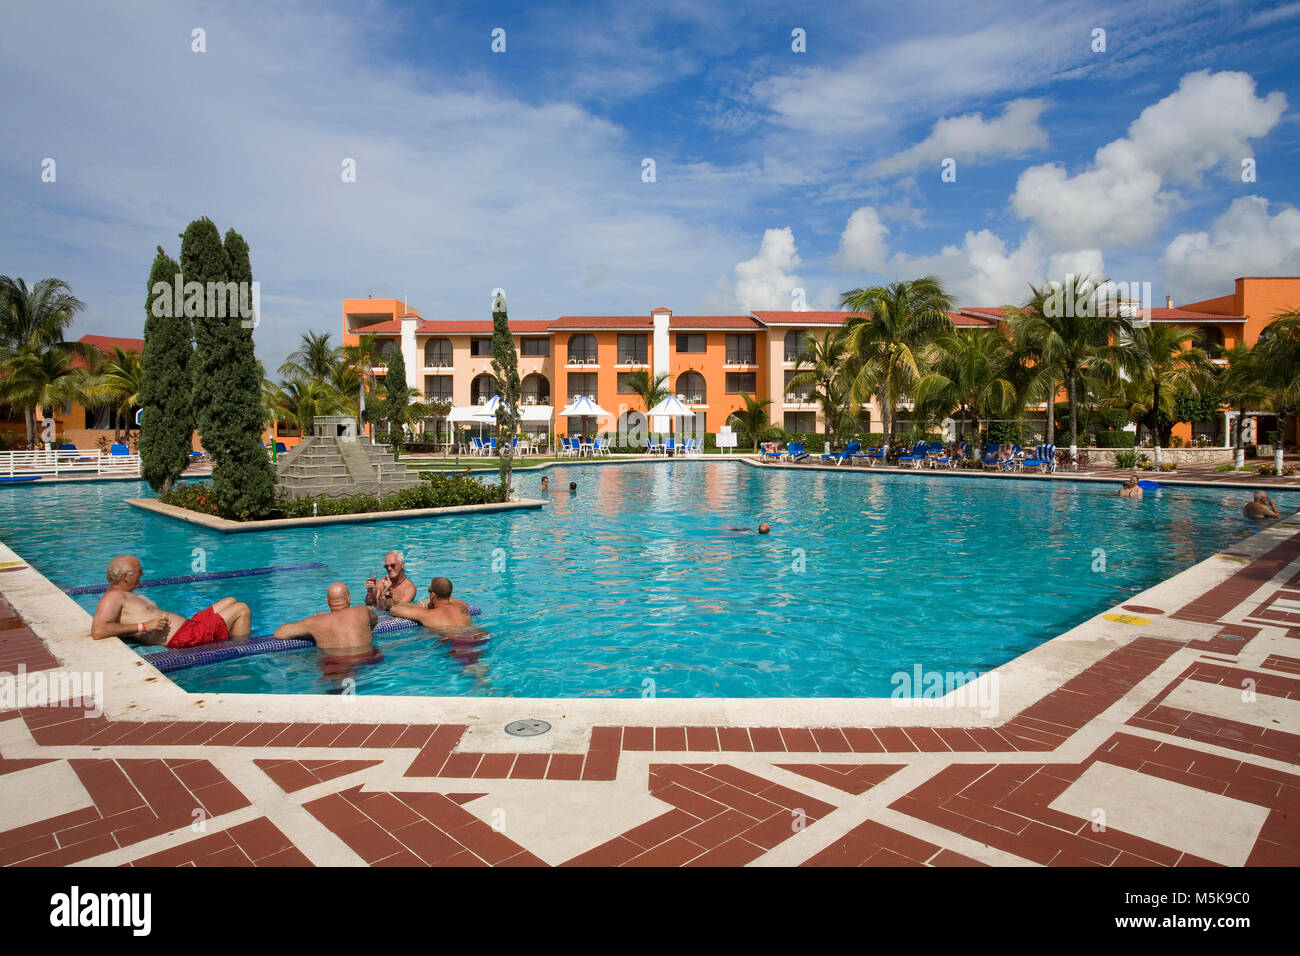 Senioren im Pool vom Hotel Cozumel, Cozumel, Mexiko, Karibik | Seniors standing in pool of Hotel Cozumel, Cozumel, Mexico, Caribbean Stock Photo